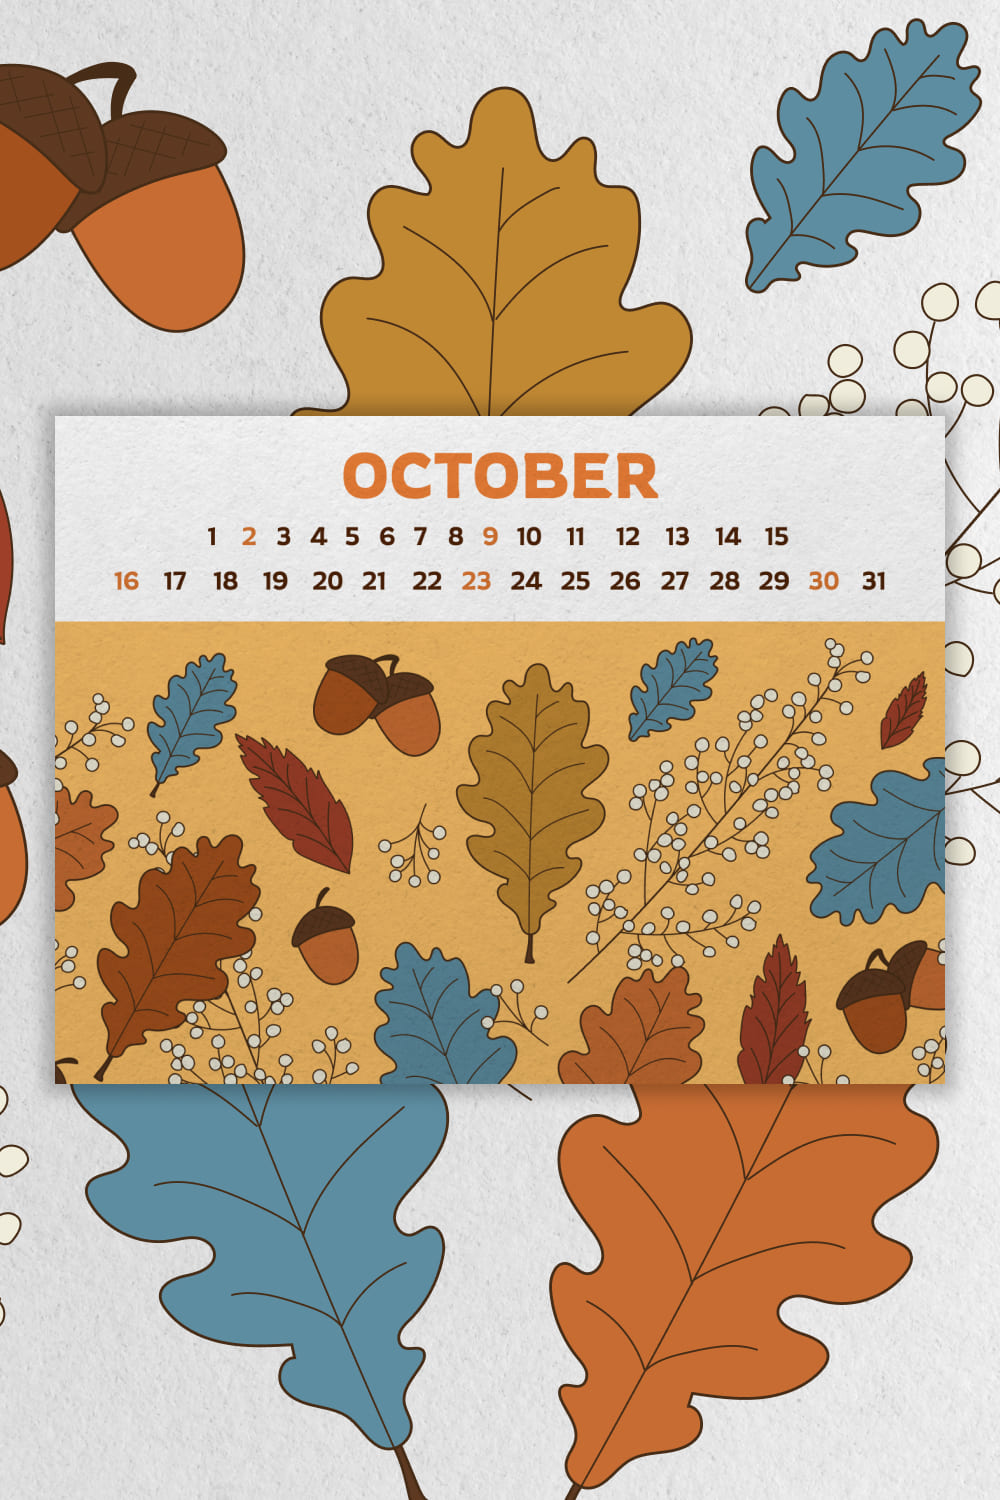 Free Editable Calendar October Acorns and Leaves Pinterest image.